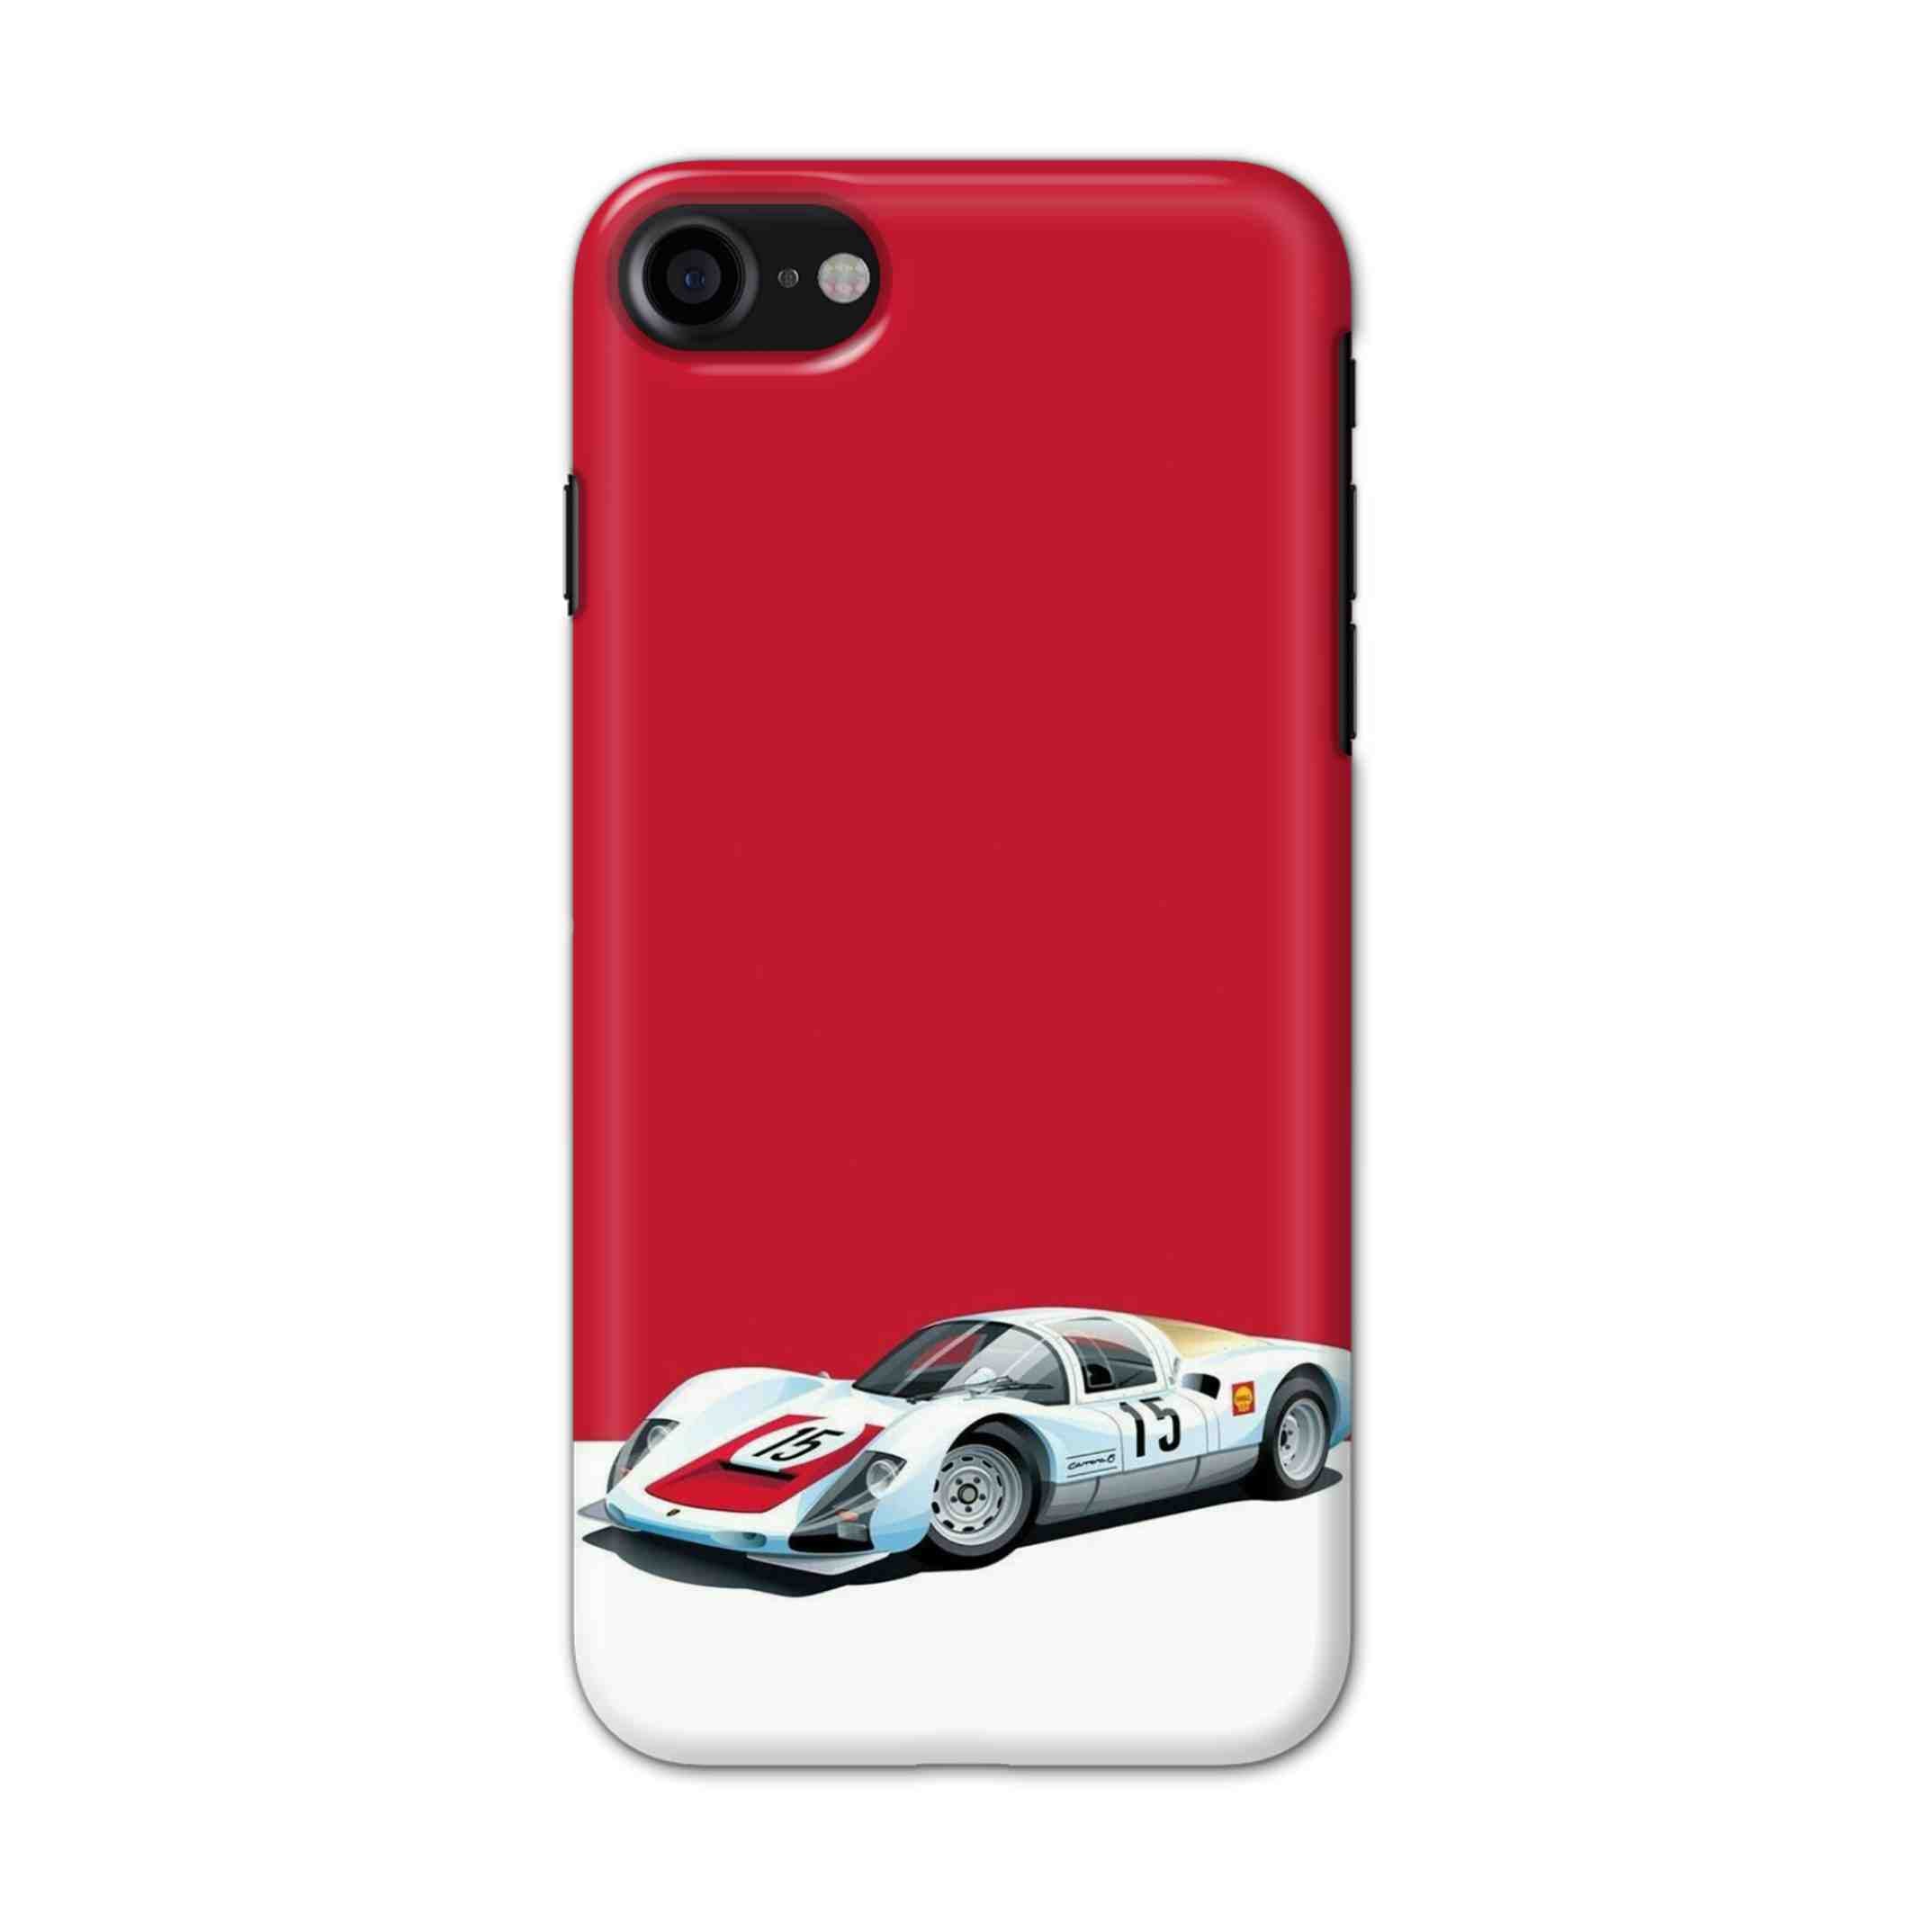 Buy Ferrari F15 Hard Back Mobile Phone Case/Cover For iPhone 7 / 8 Online